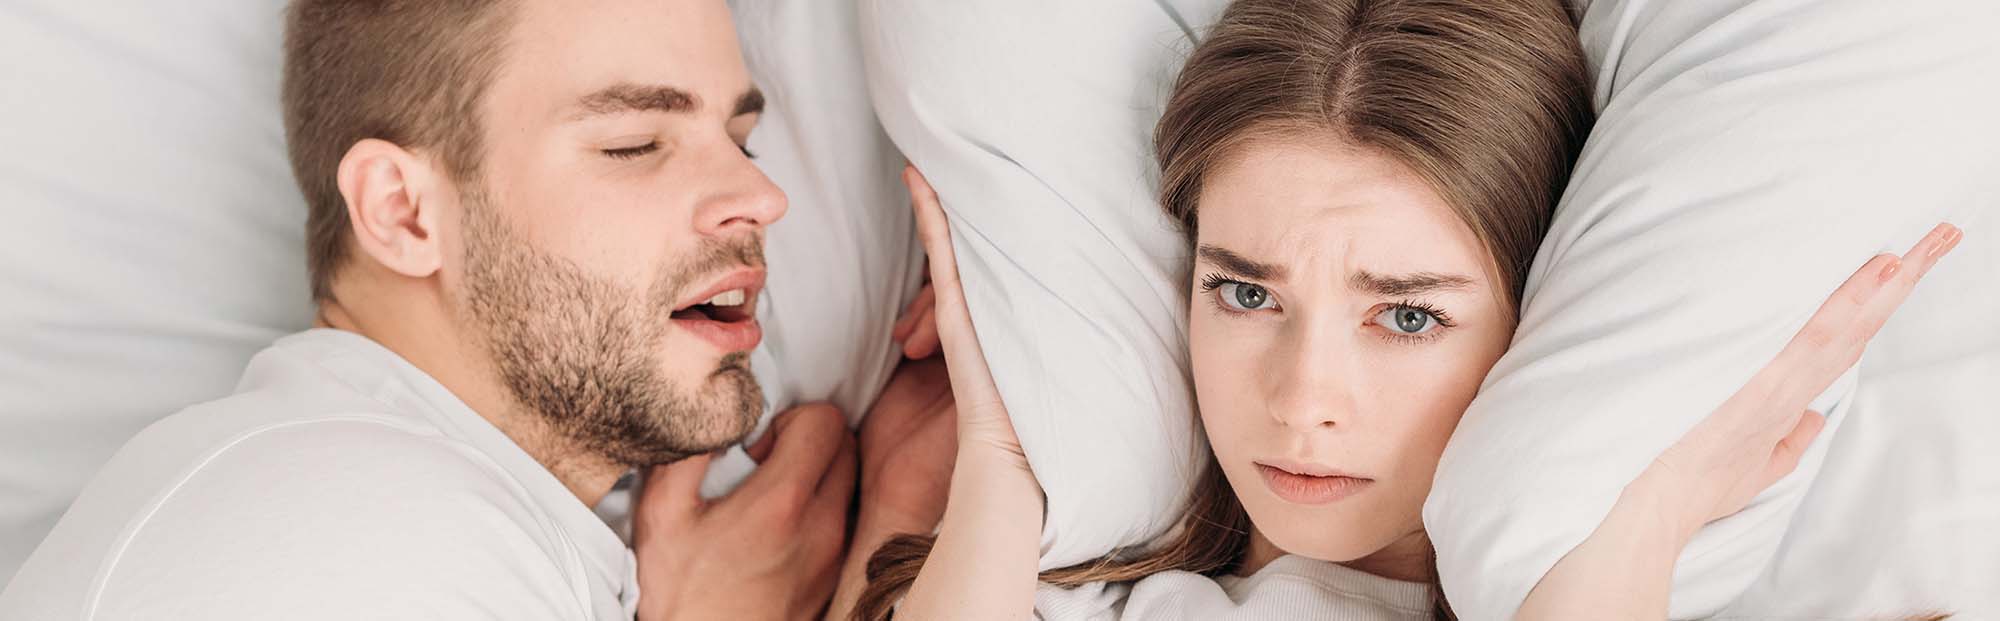 Couple experiencing sleep apnea symptoms